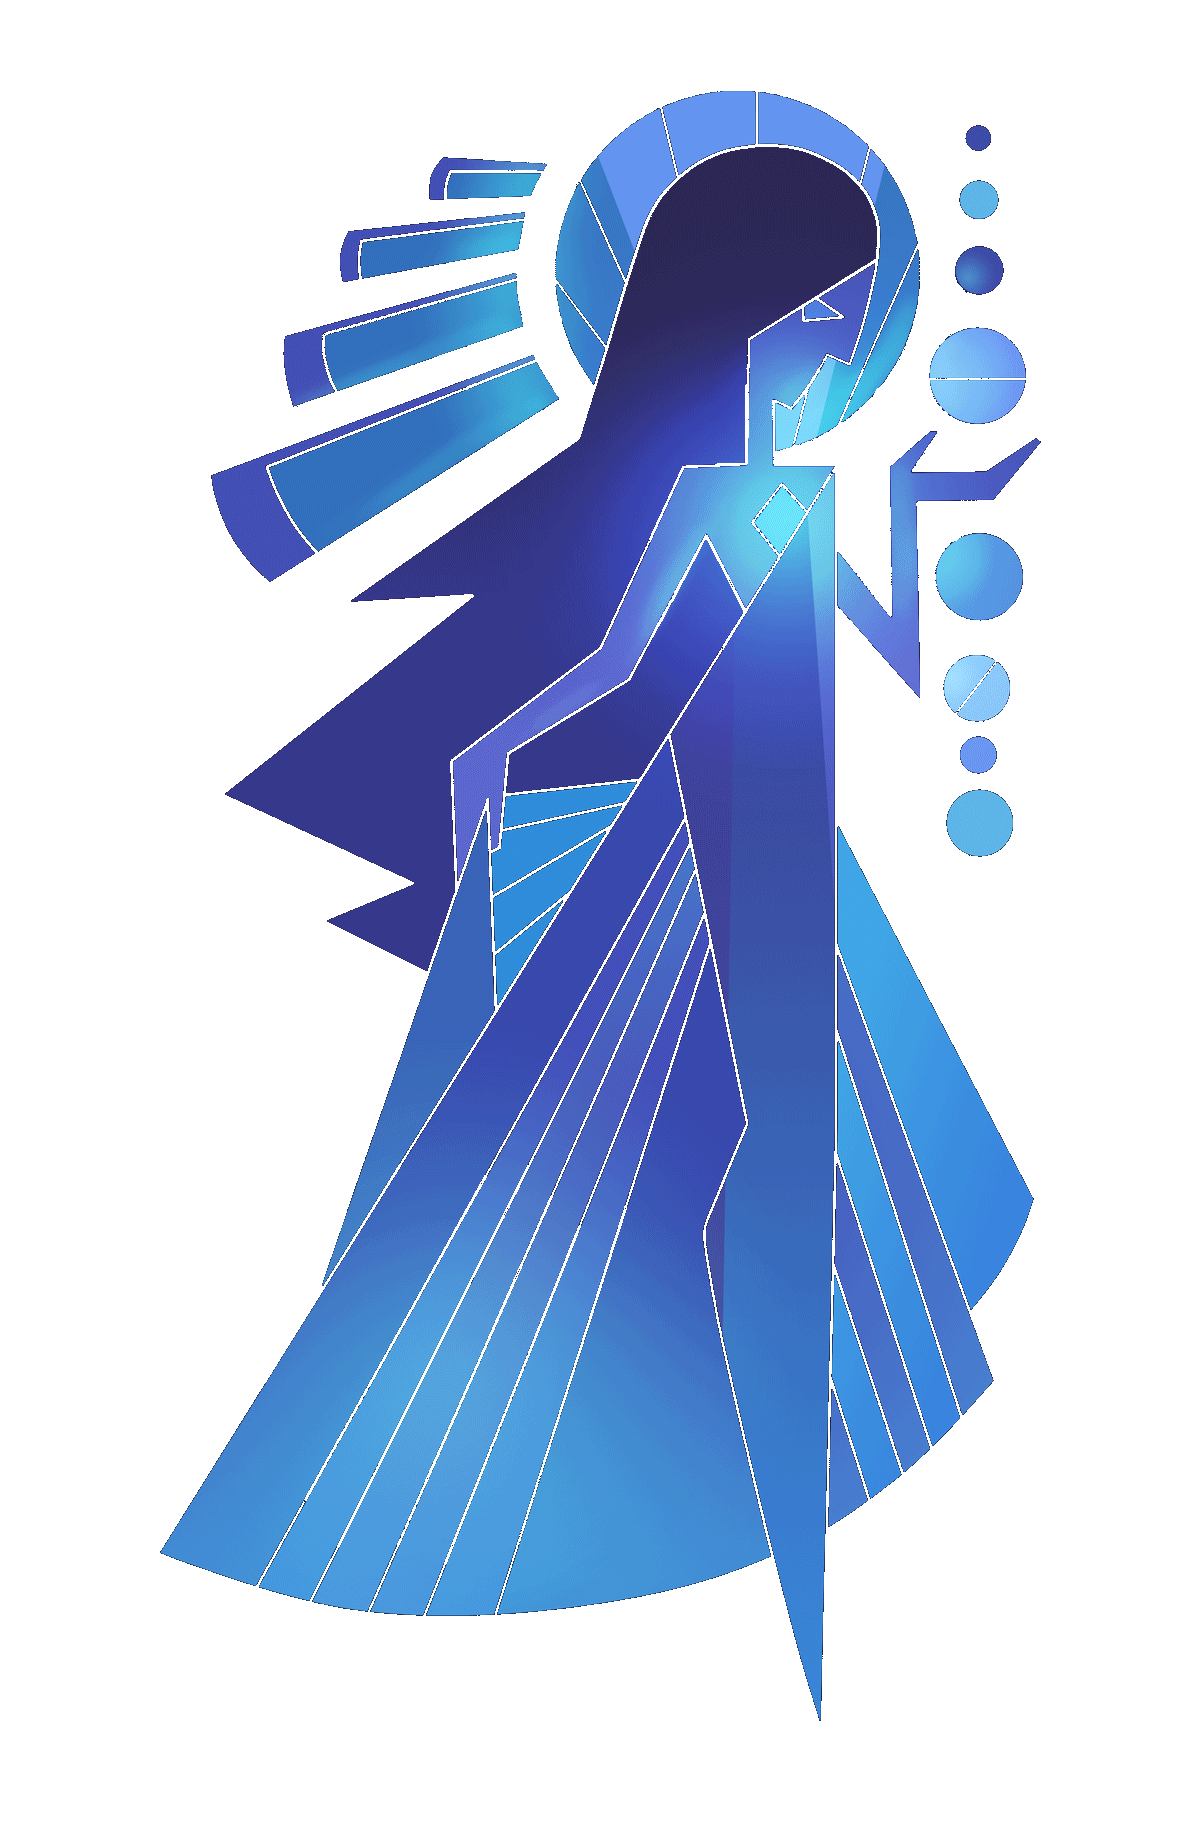 Steven Universe Diamonds Logo - Image - Blue Diamond Mural.png | Steven Universe Wiki | FANDOM ...